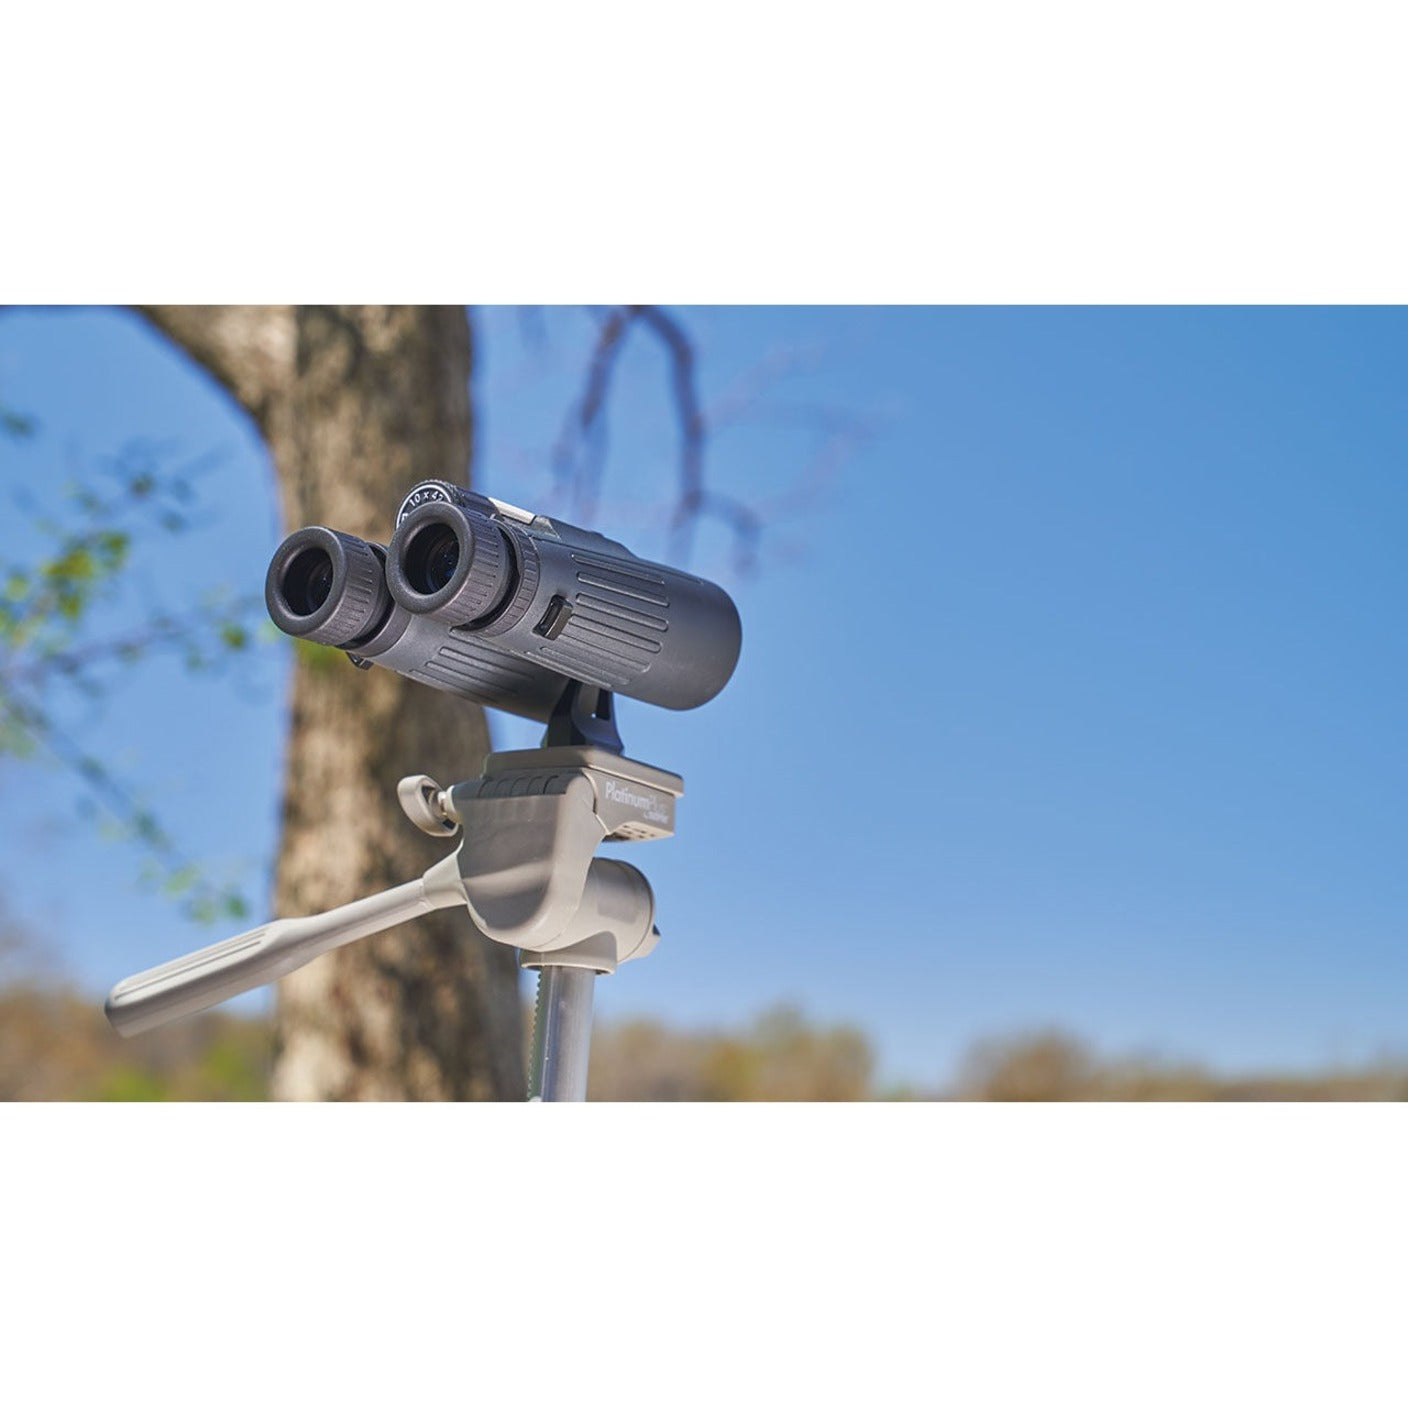 Bushnell PWV1632 PowerView 2 16x 32mm Binoculars, Lifetime Warranty, Roof Prism Design